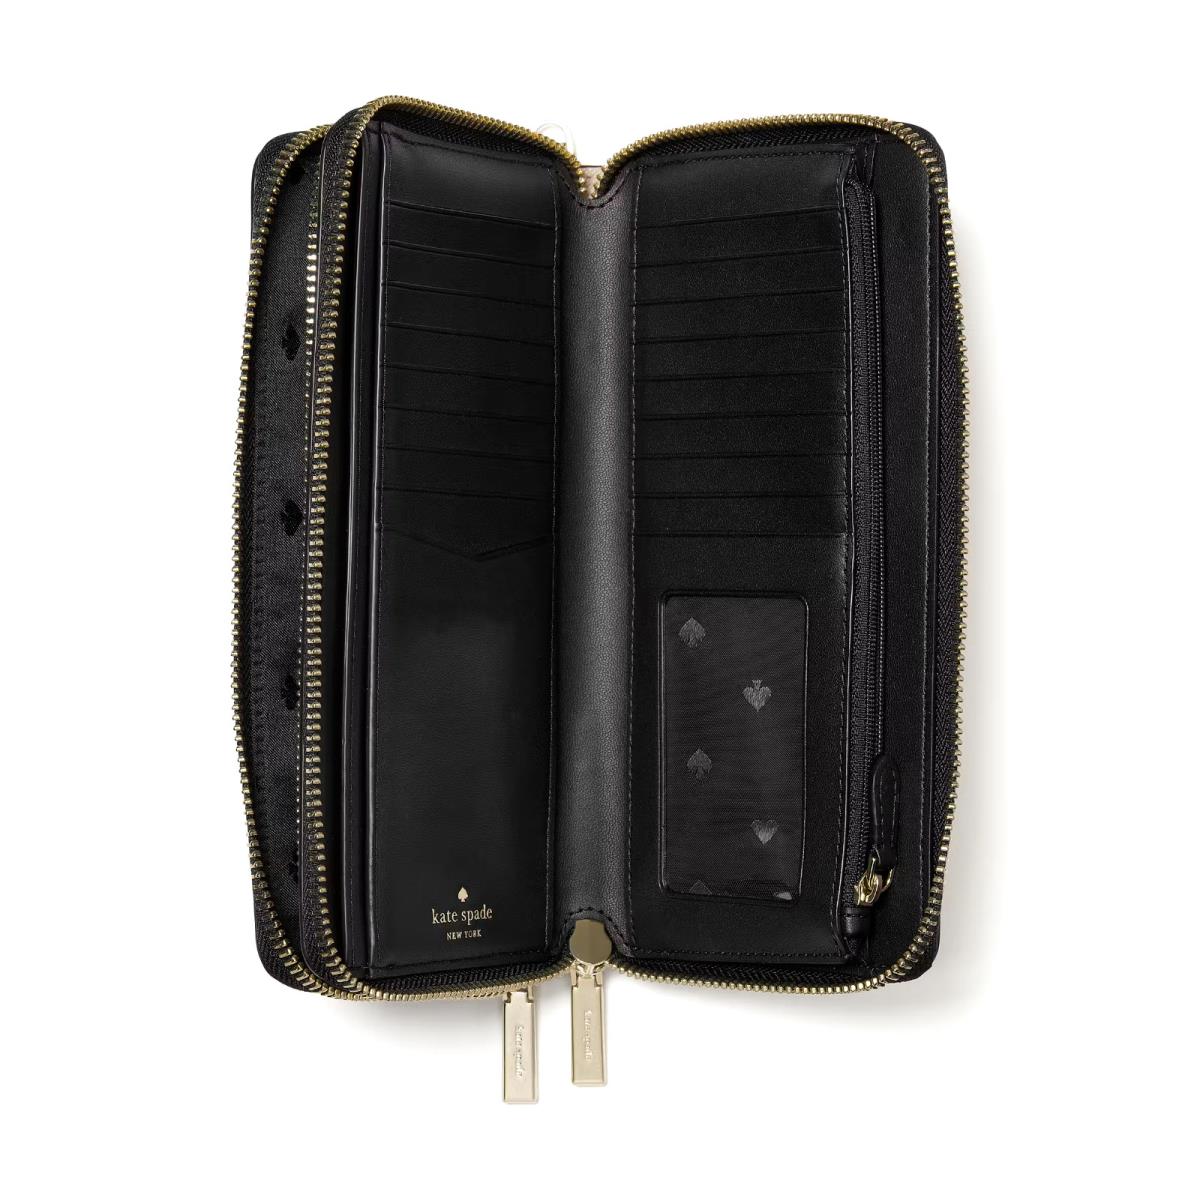 New Kate Spade Staci Large Carryall Wristlet Wallet Leather Warm Beige Multi